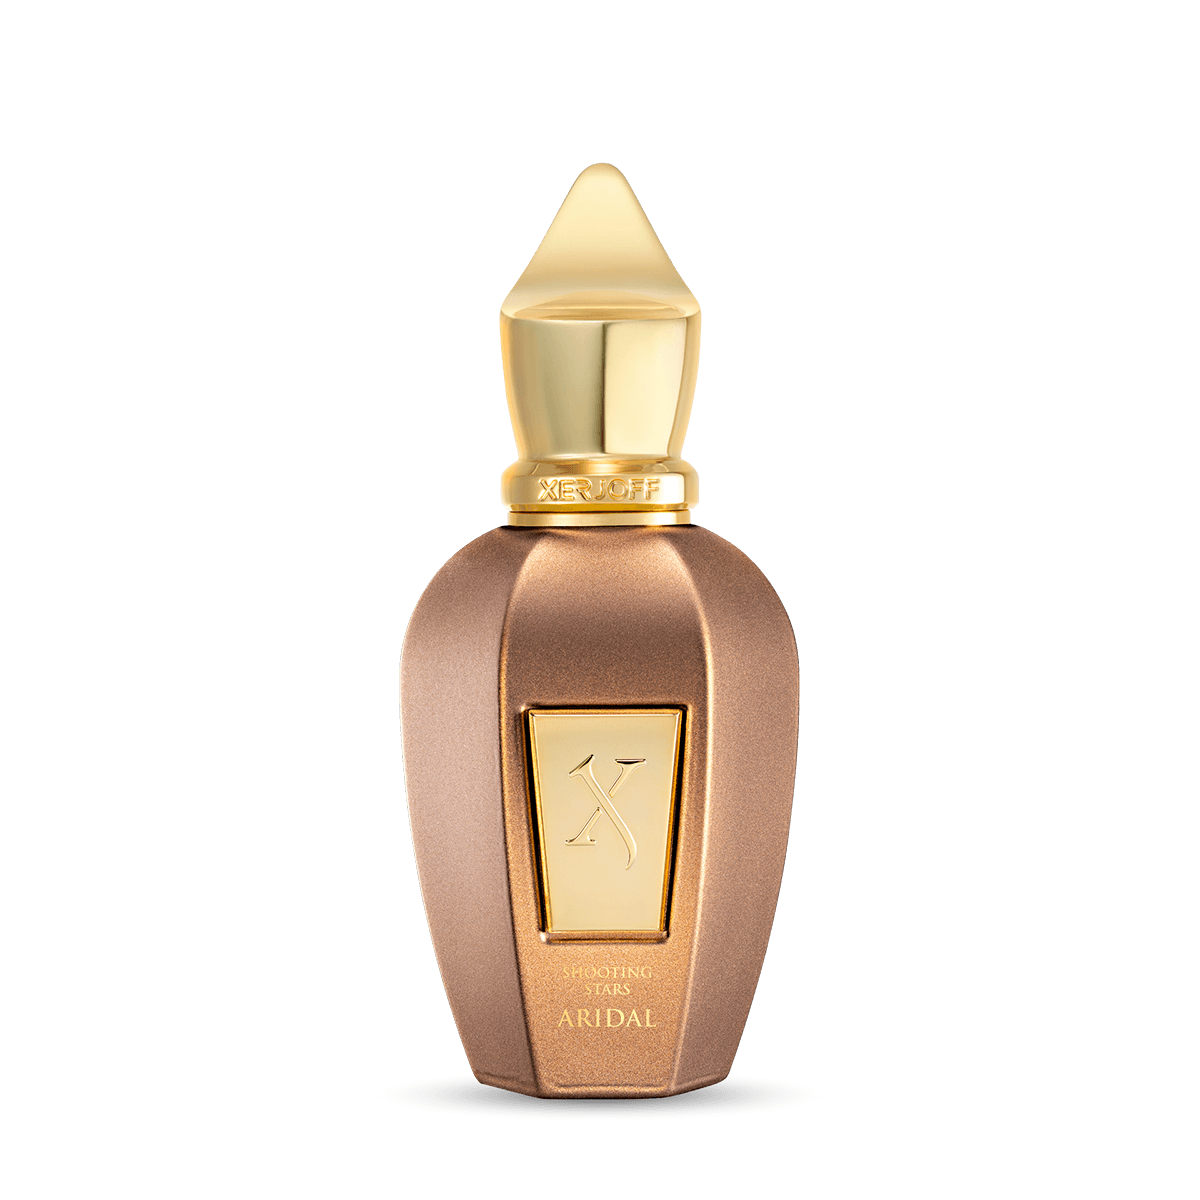 ARIDAL - New XERJOFF Fragrance - Online Exclusive